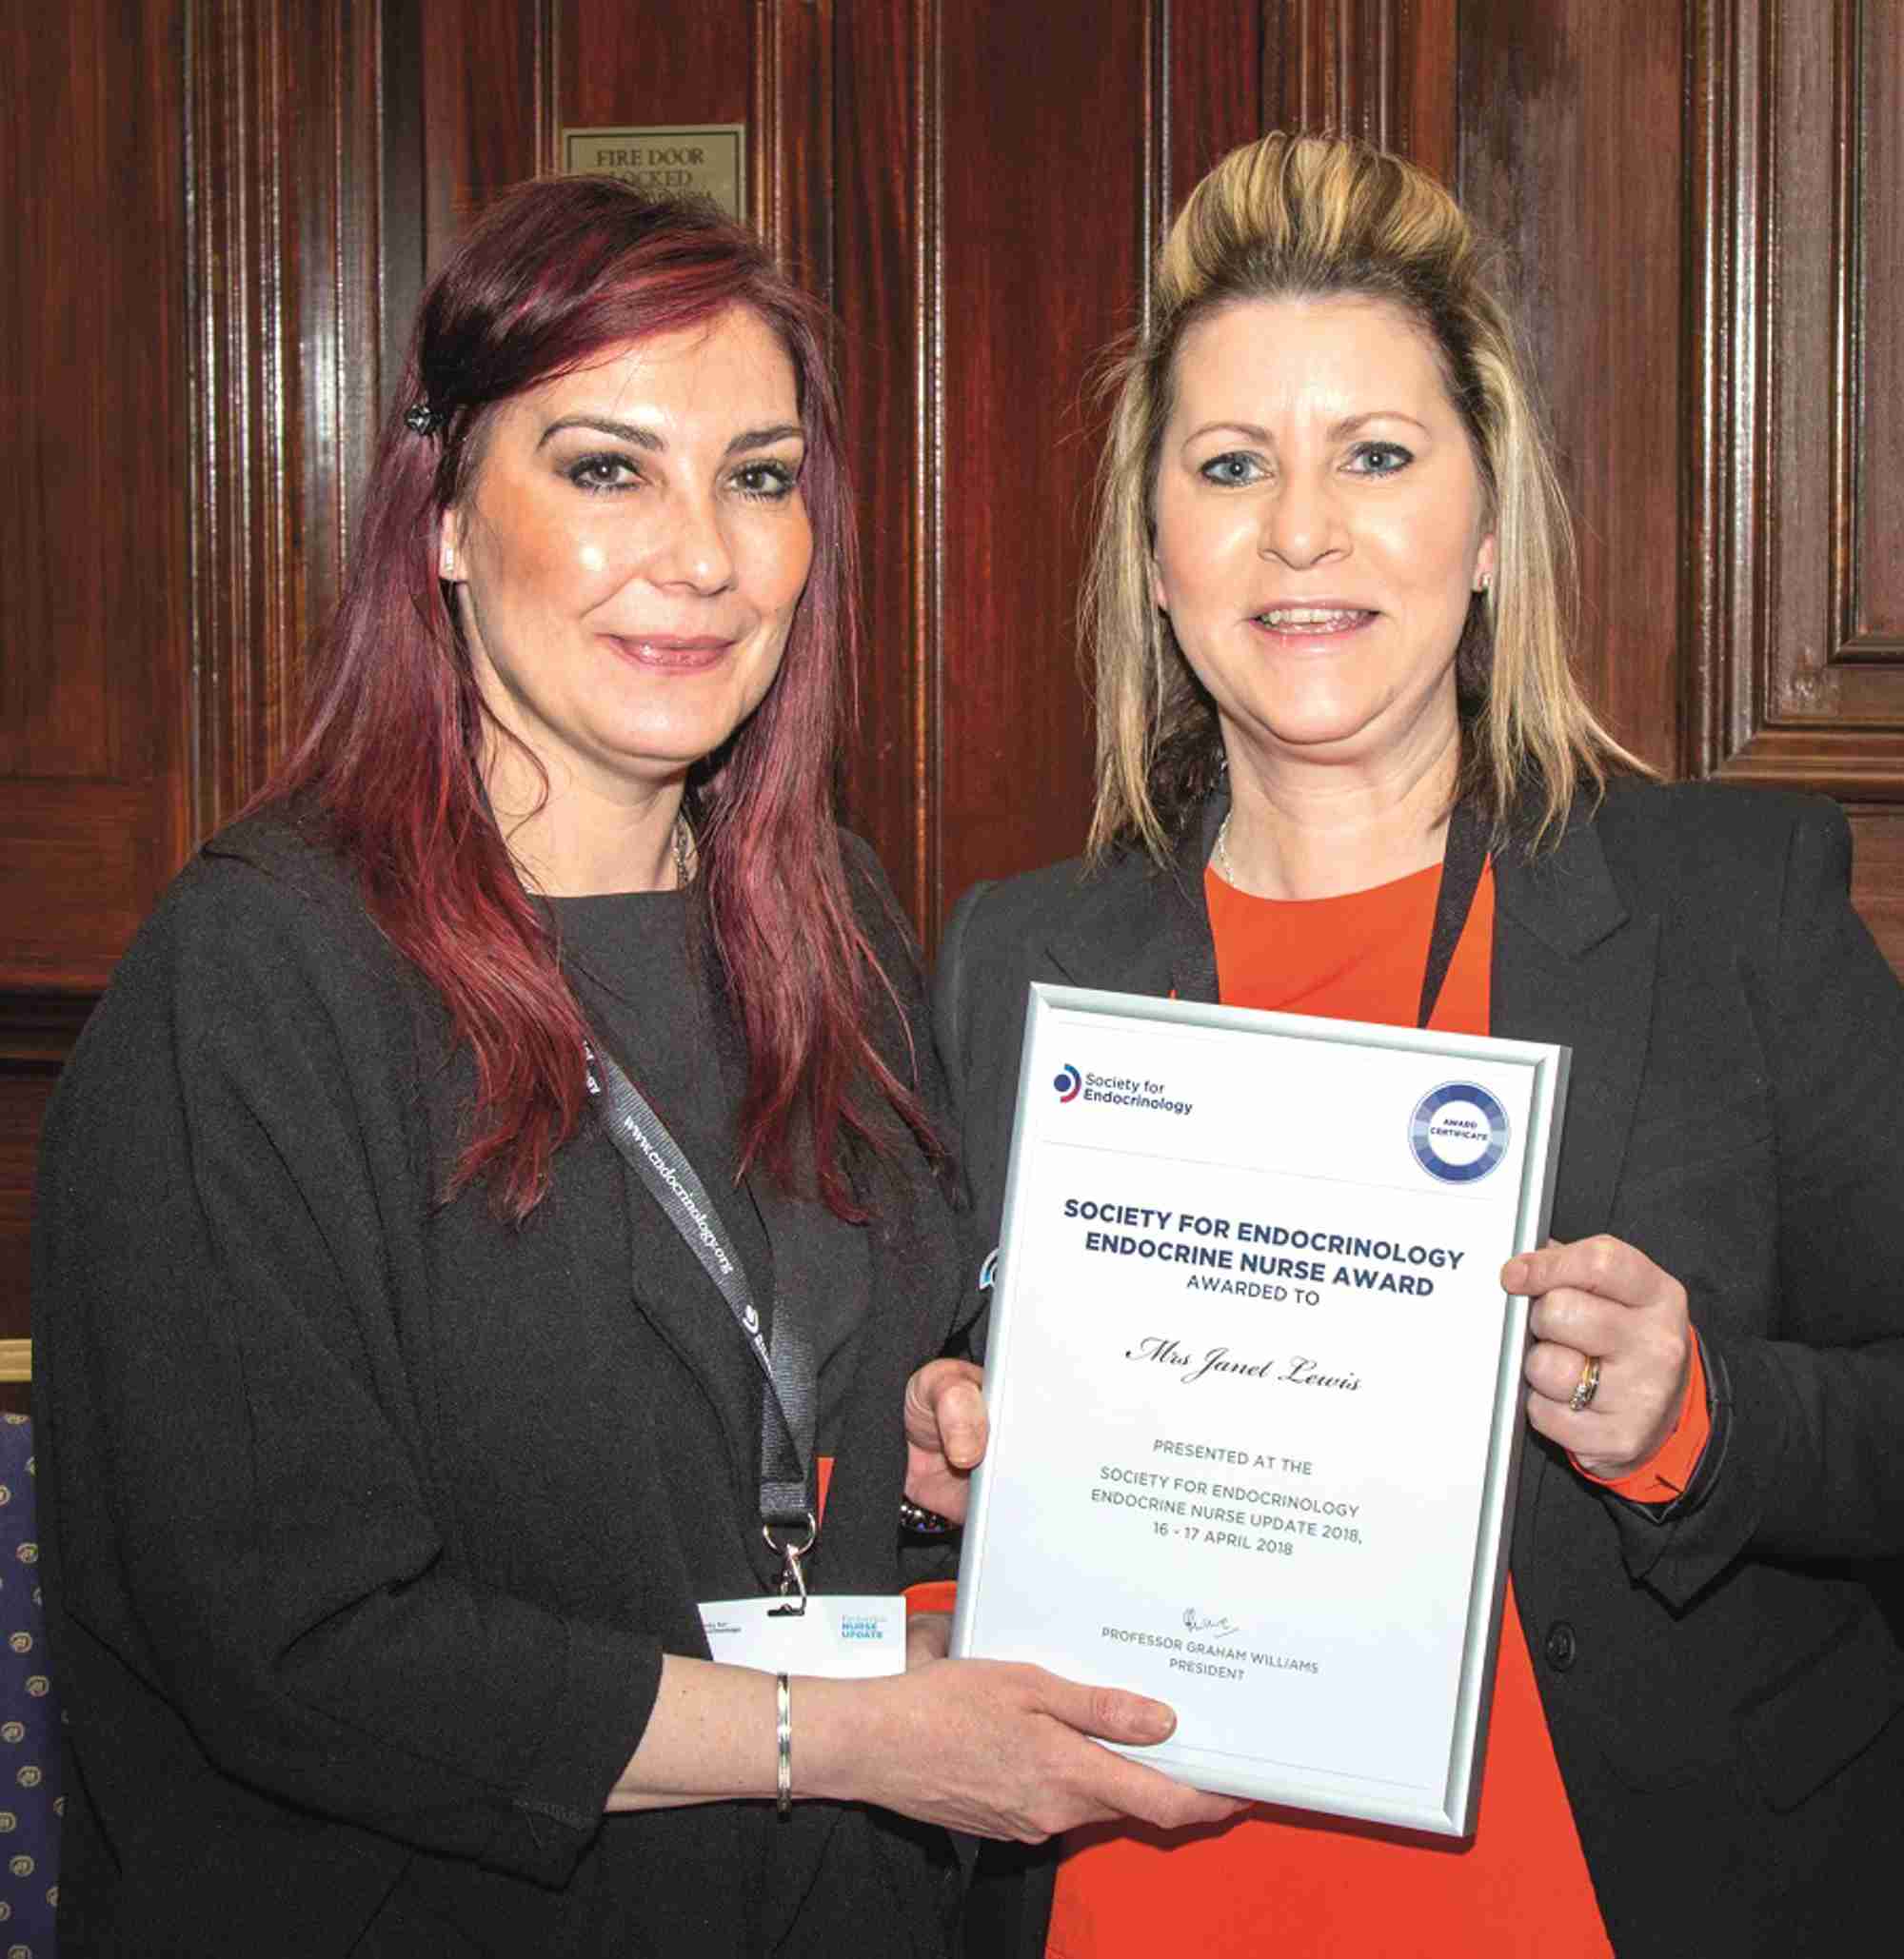 Janet Lewis (right) receives her award from Lisa Shepherd at Endocrine Nurse Update in Birmingham